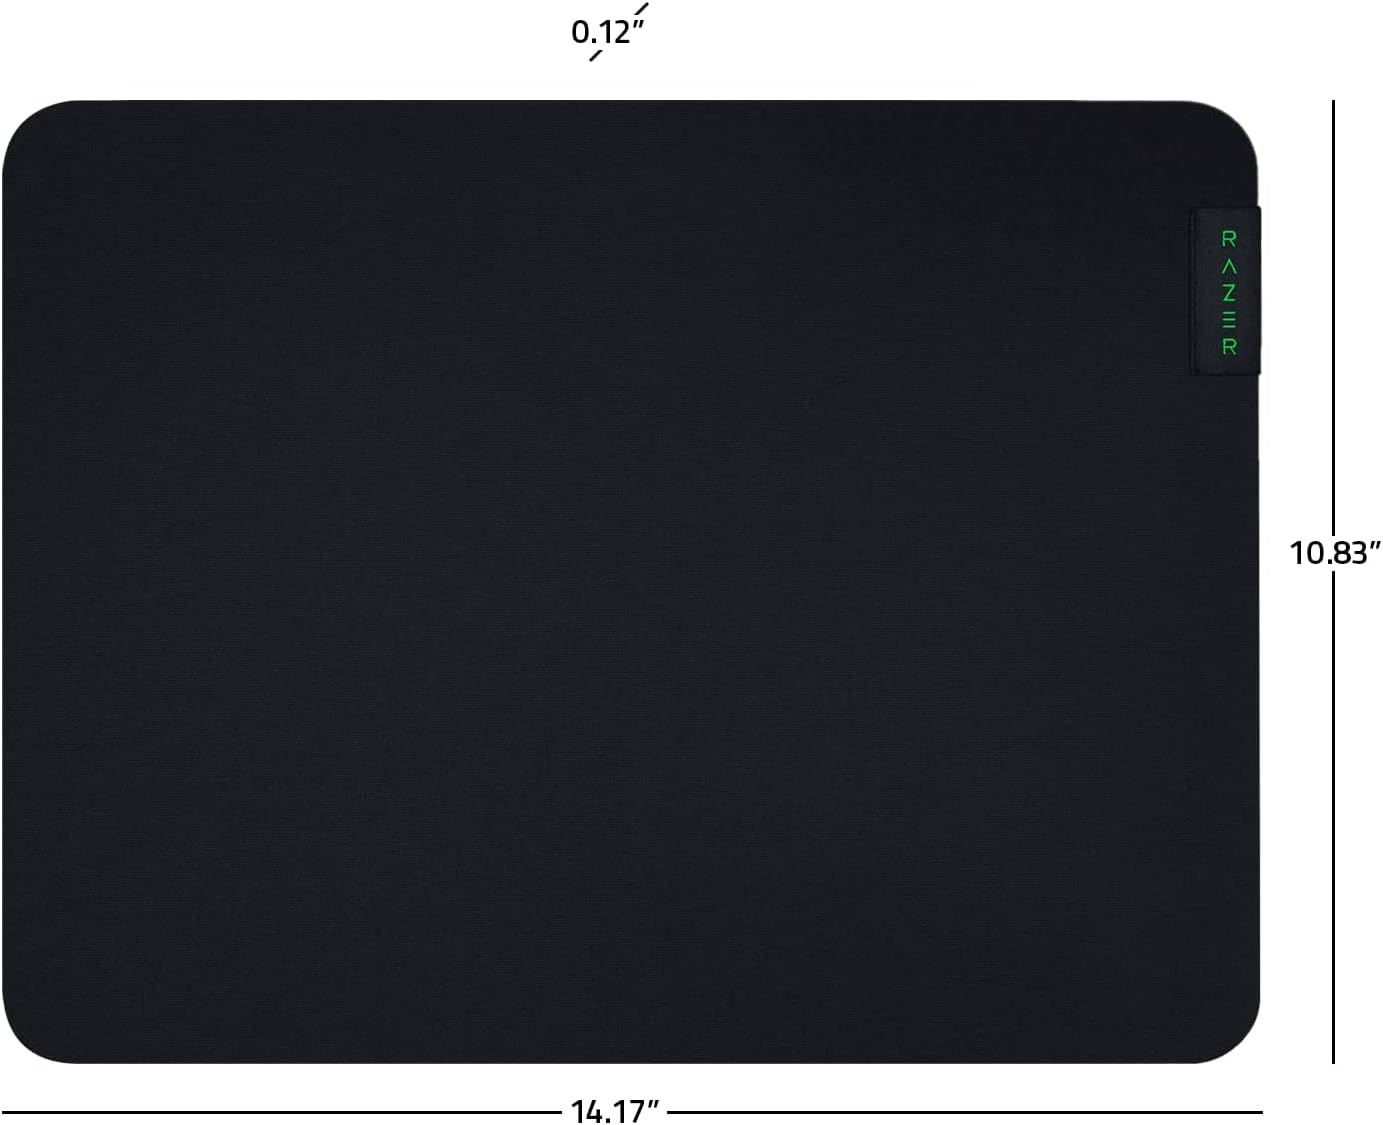 Razer Gigantus v2 Cloth Gaming Mouse Pad High-Density Foam Non-Slip Base Black - Geek Tech